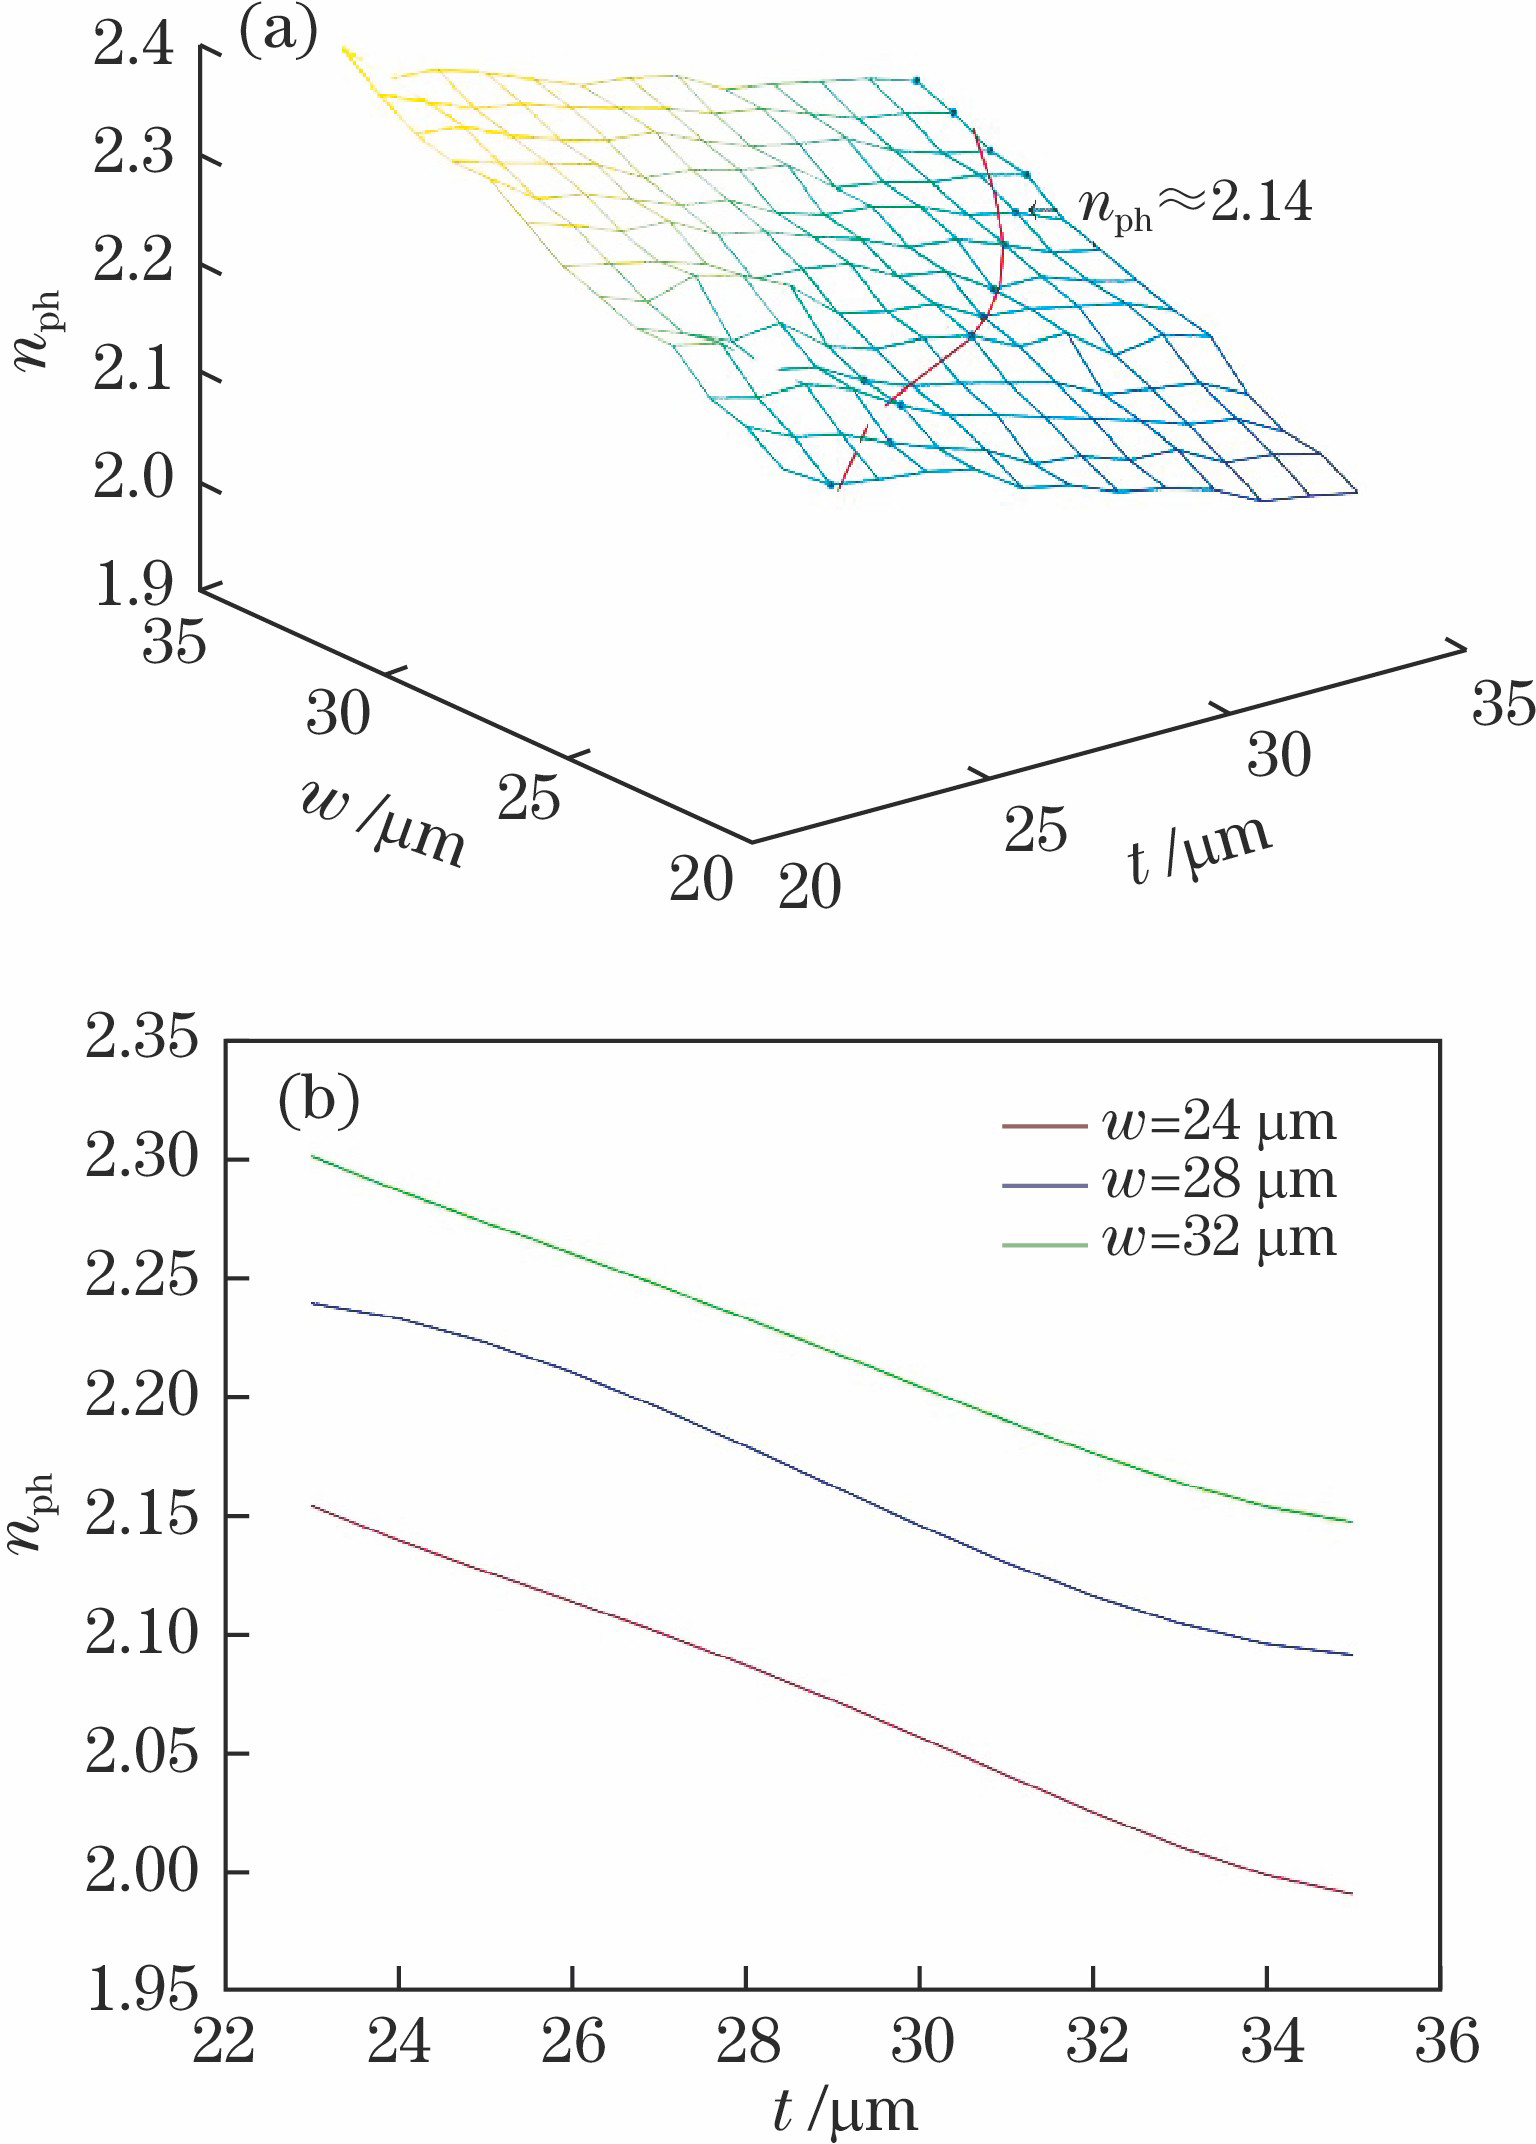 Coplanar waveguide simulation results of millimeter wave EOM. (a) Distribution network of 13×13 nph; (b) trend comparison of 3×13 nph